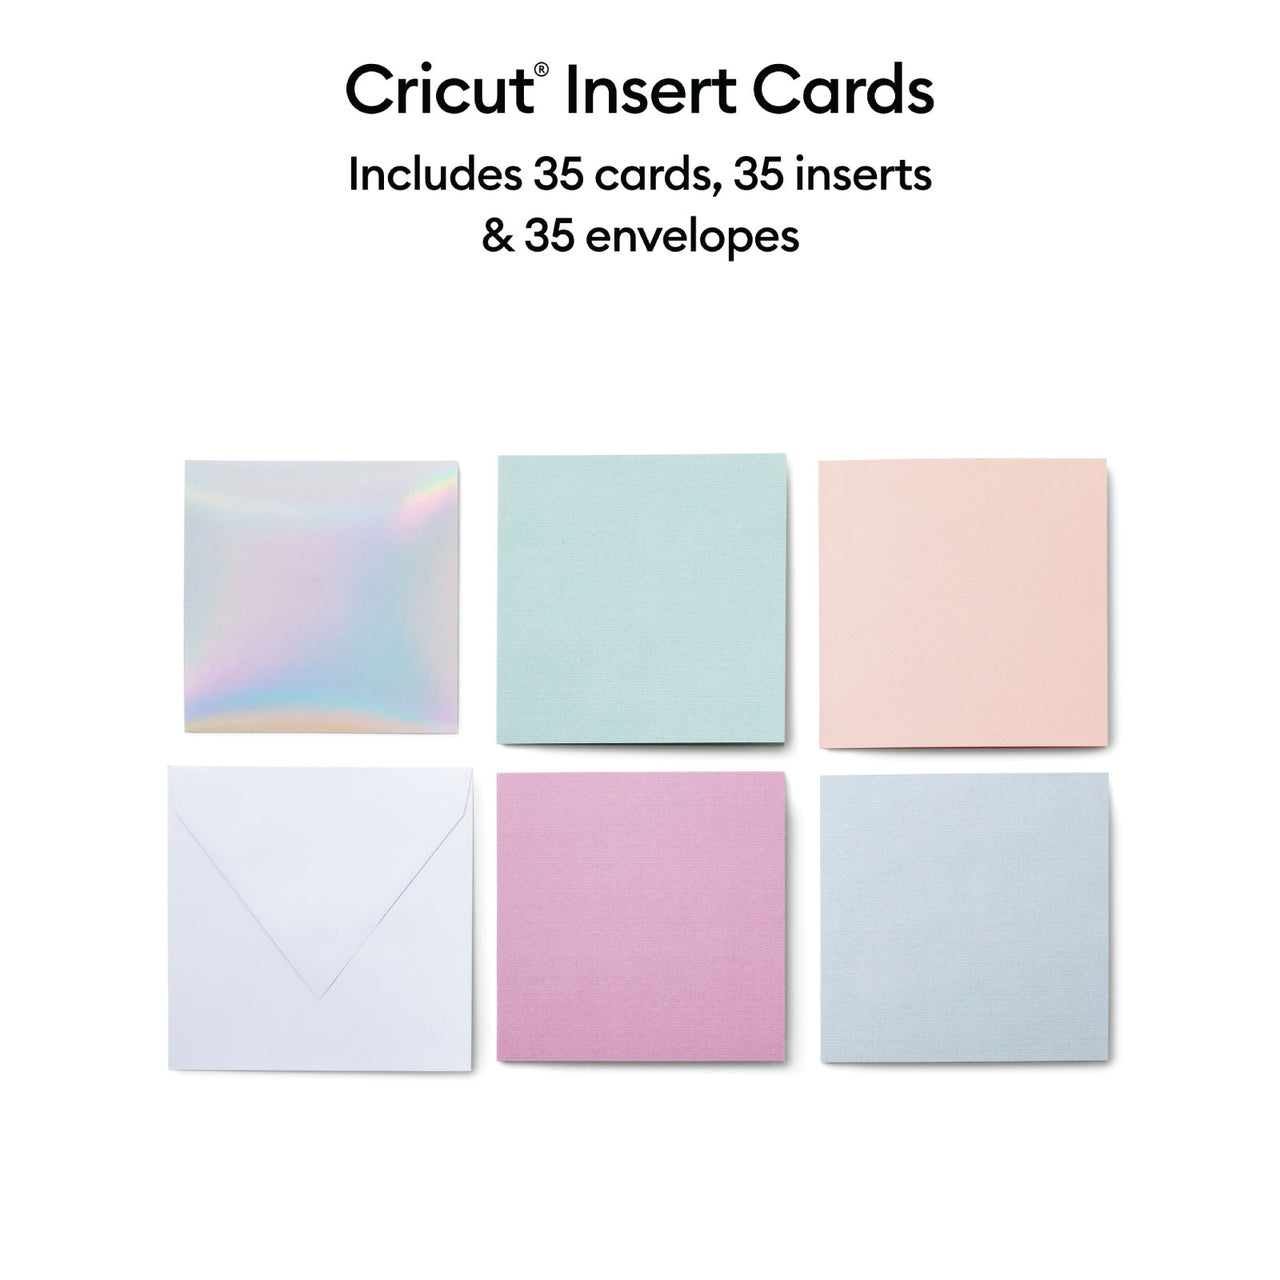 Cricut Insert Cards, Princess Sampler - S40 (35 ct) - Damaged Package